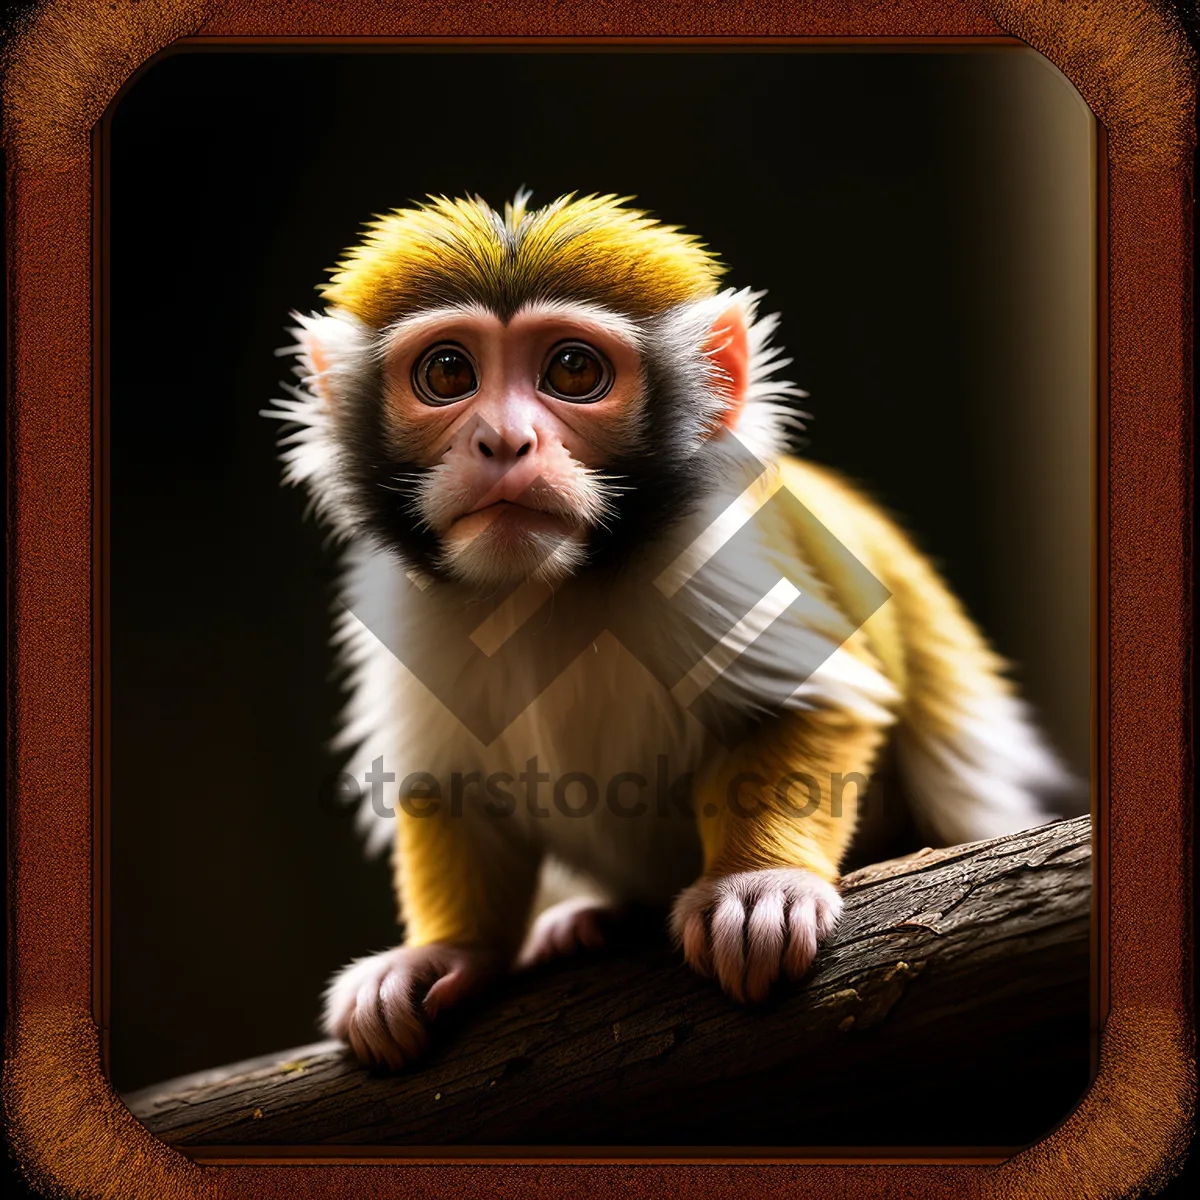 Picture of Cute jungle primate with wild fur